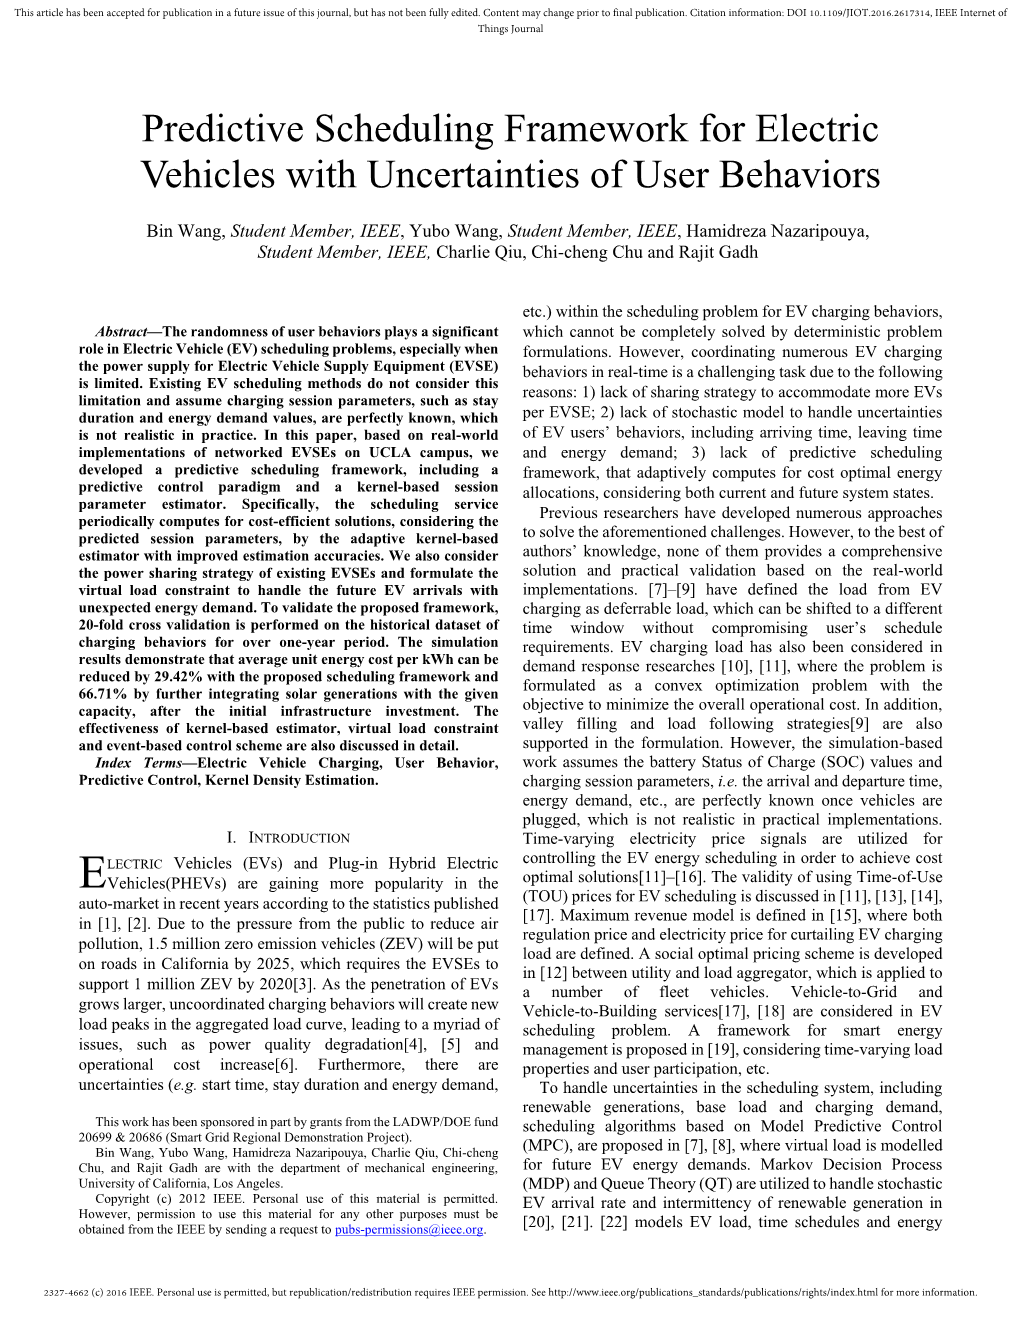 Predictive Scheduling Framework for Electric Vehicles with Uncertainties of User Behaviors